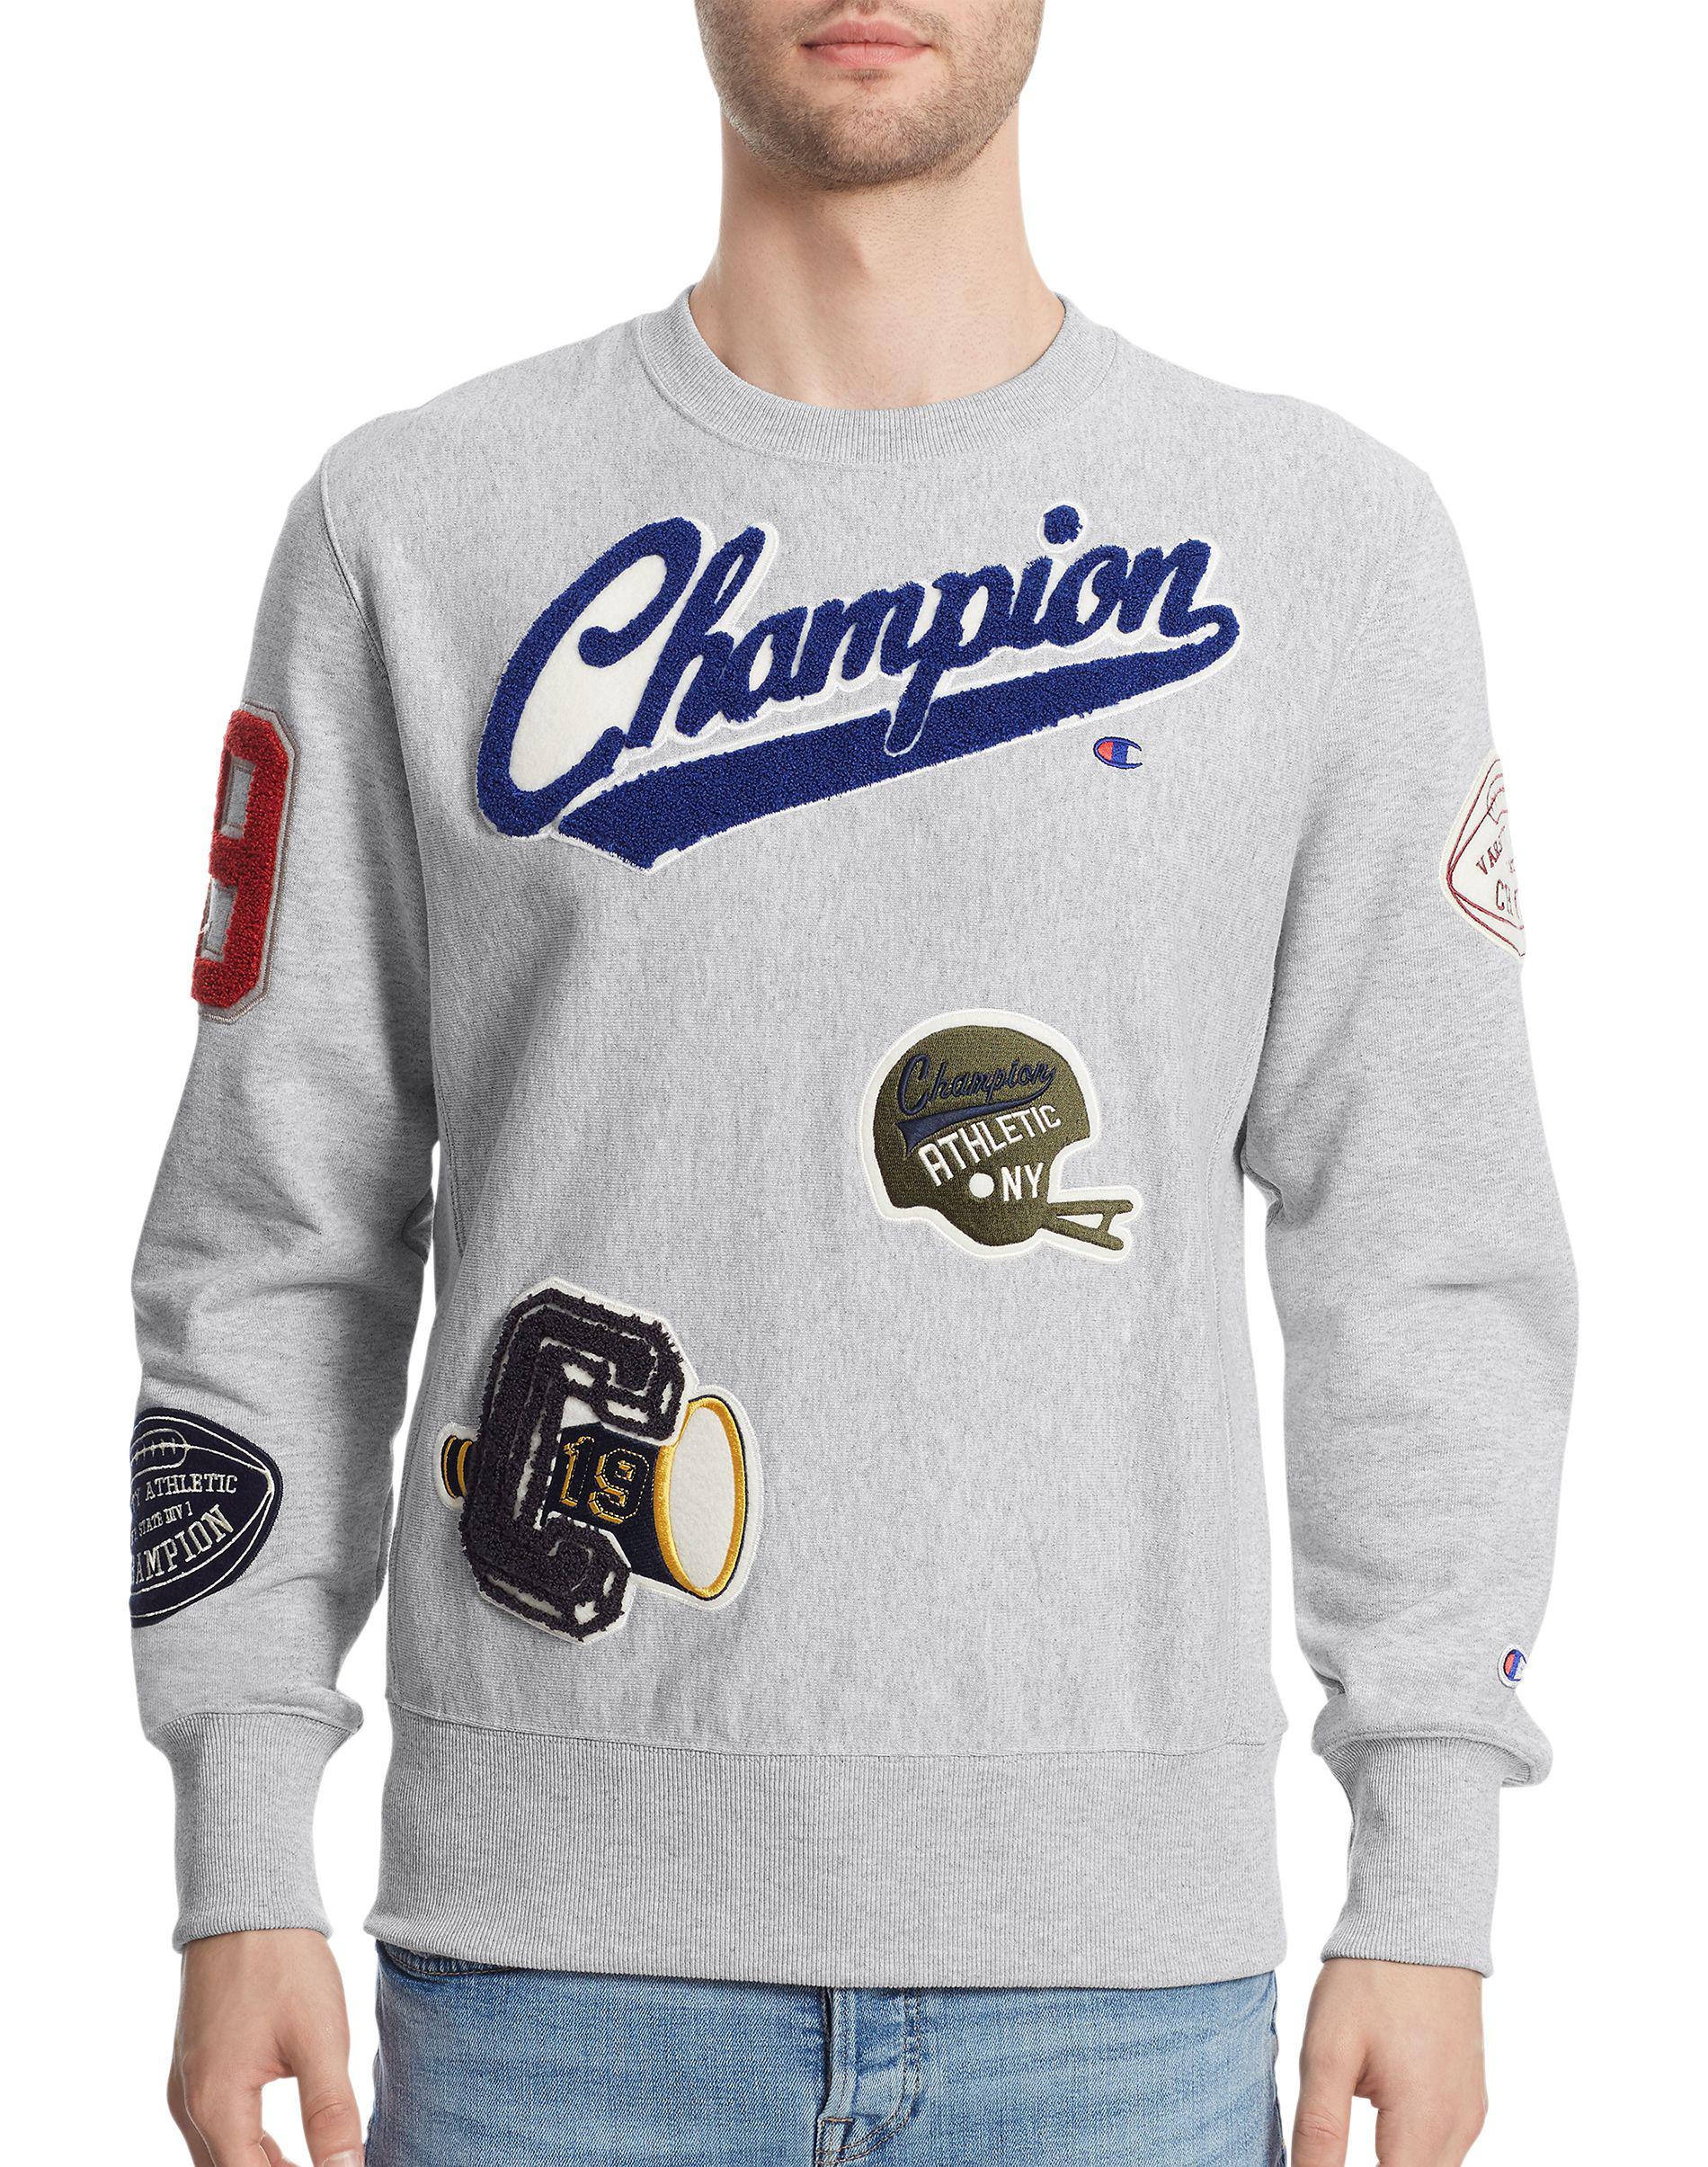 limited edition champion sweatshirt